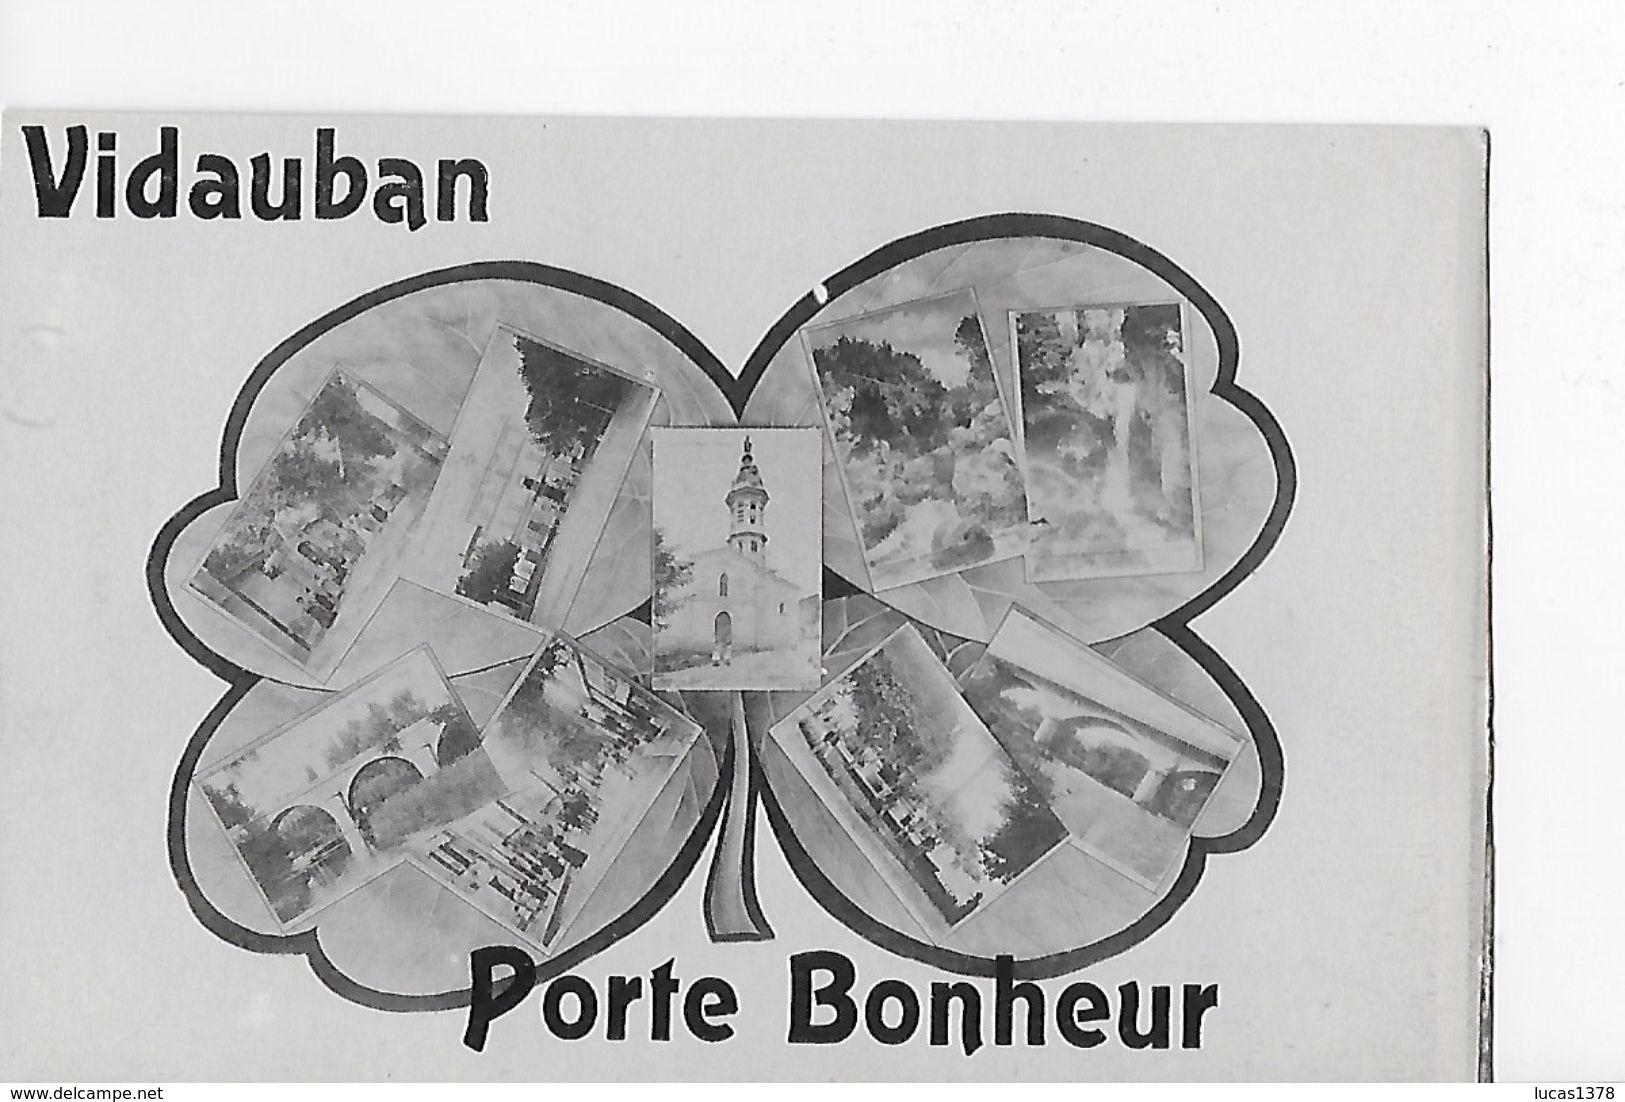 83 / VIDAUBAN / PORTE BONHEUR - Vidauban